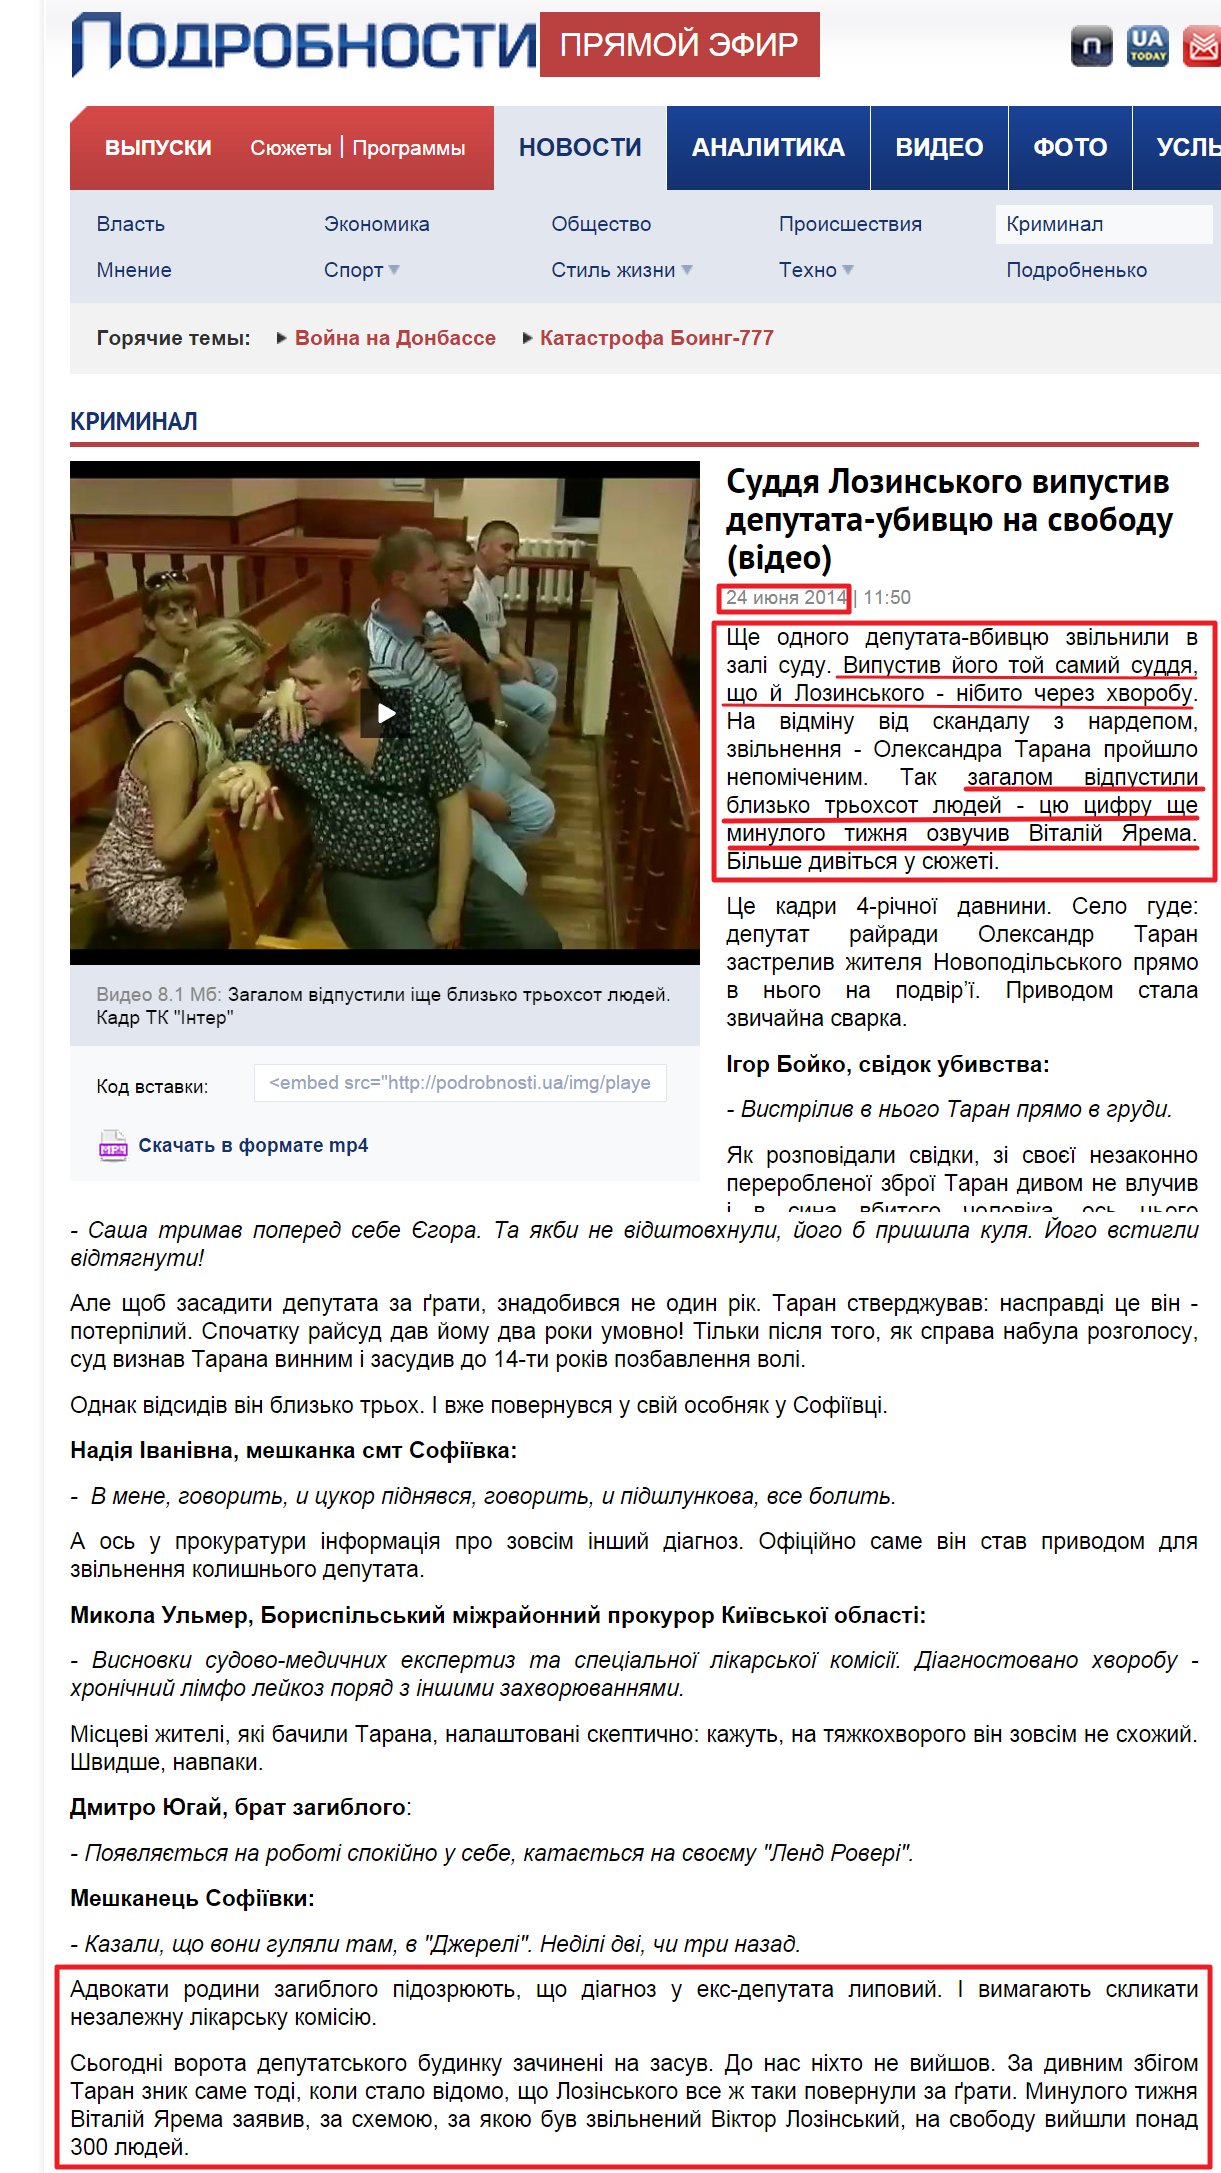 http://podrobnosti.ua/criminal/2014/06/24/981838.html